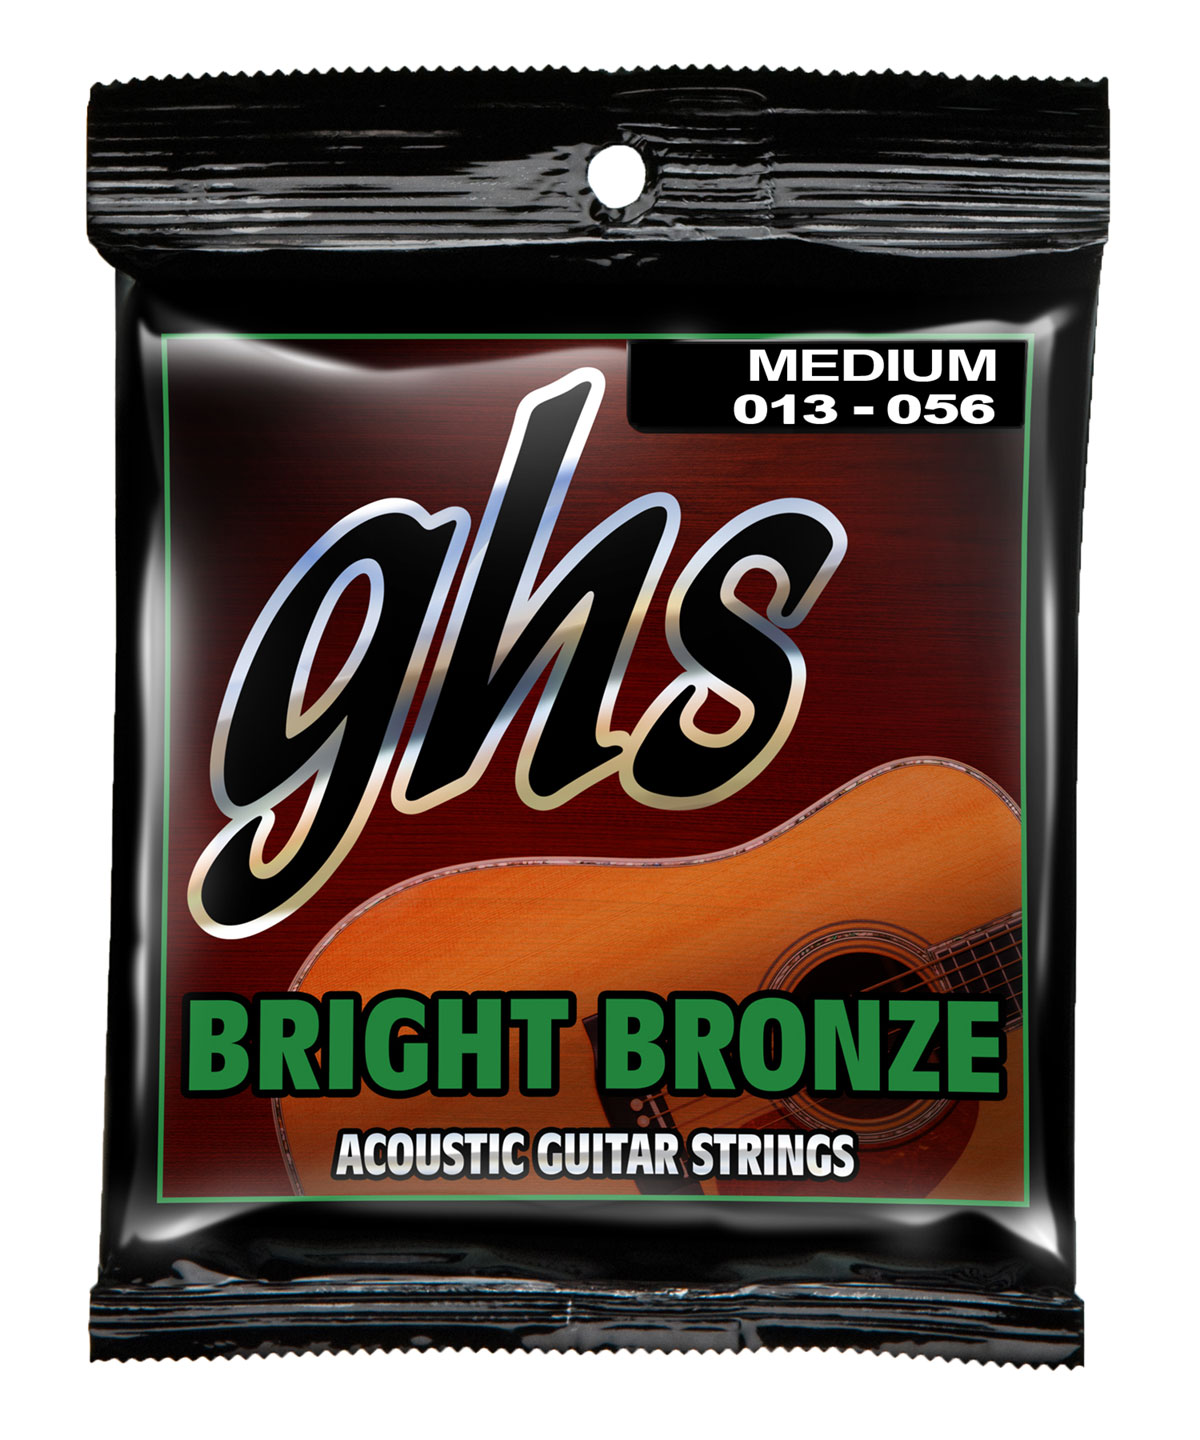 GHS Bright Bronze - BB40M - Acoustic Guitar String Set, 80/20 Bronze, Medium, .013-.056